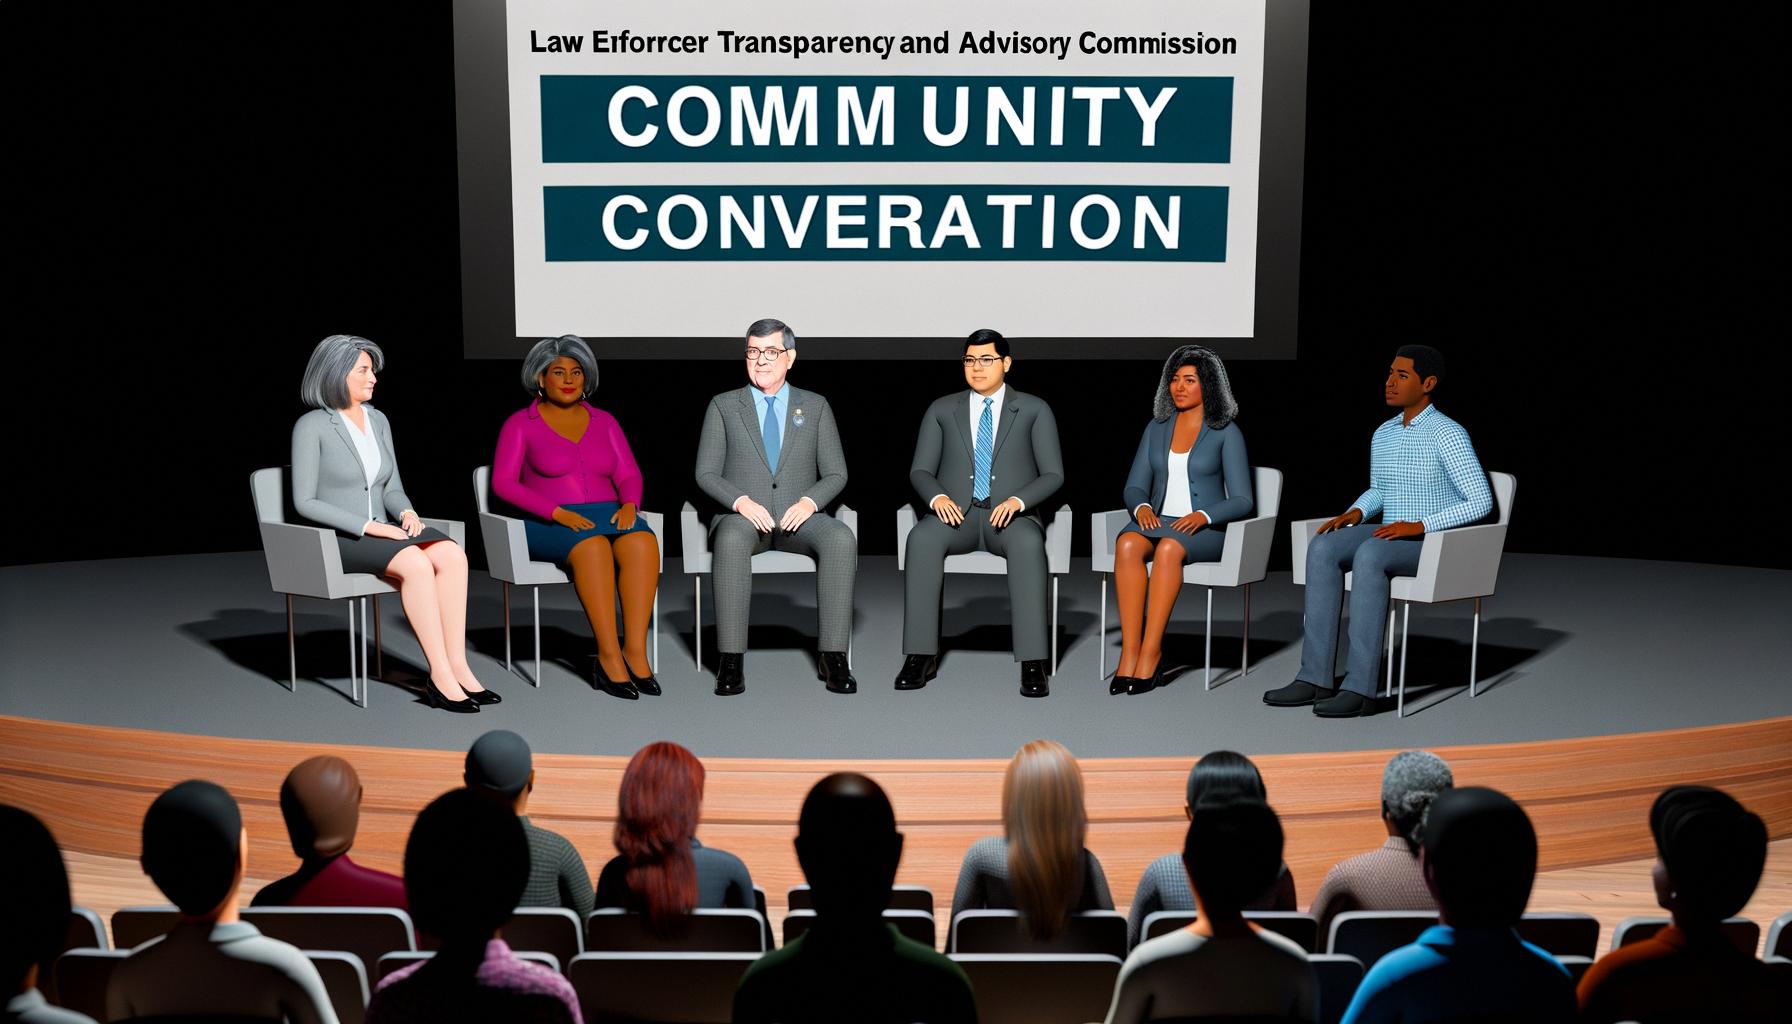 Law Enforcement Transparency and Advisory Commission hosts community conversation